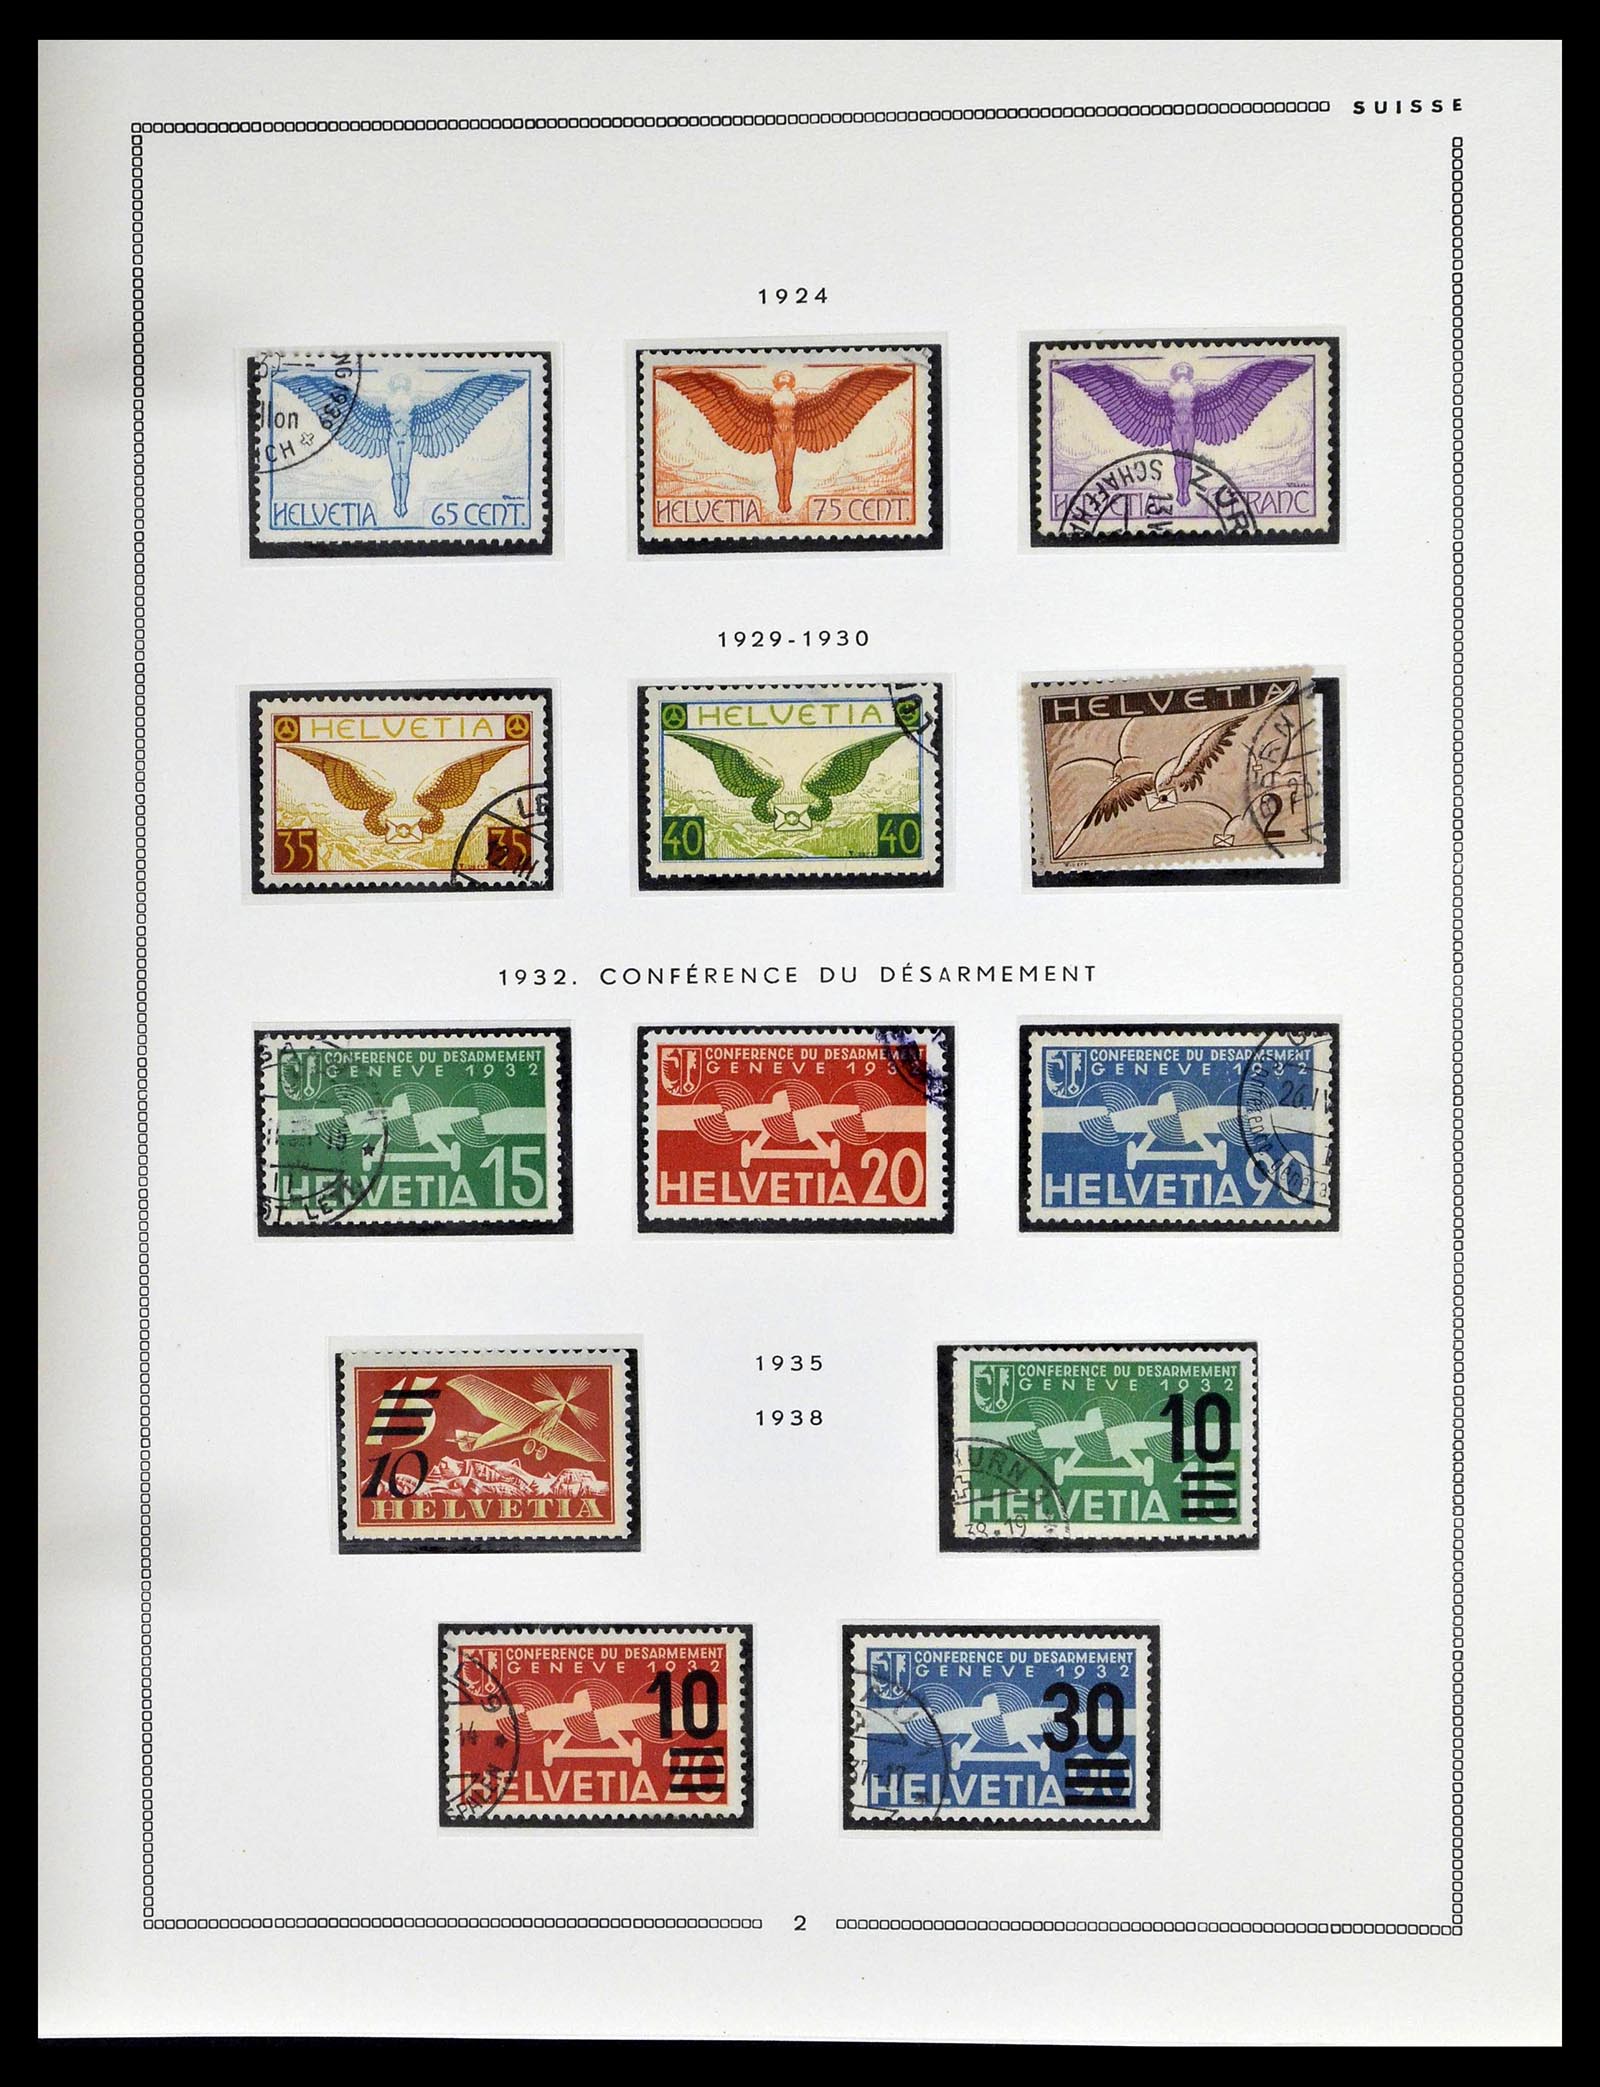 39094 0153 - Stamp collection 39094 Switzerland 1850-2005.